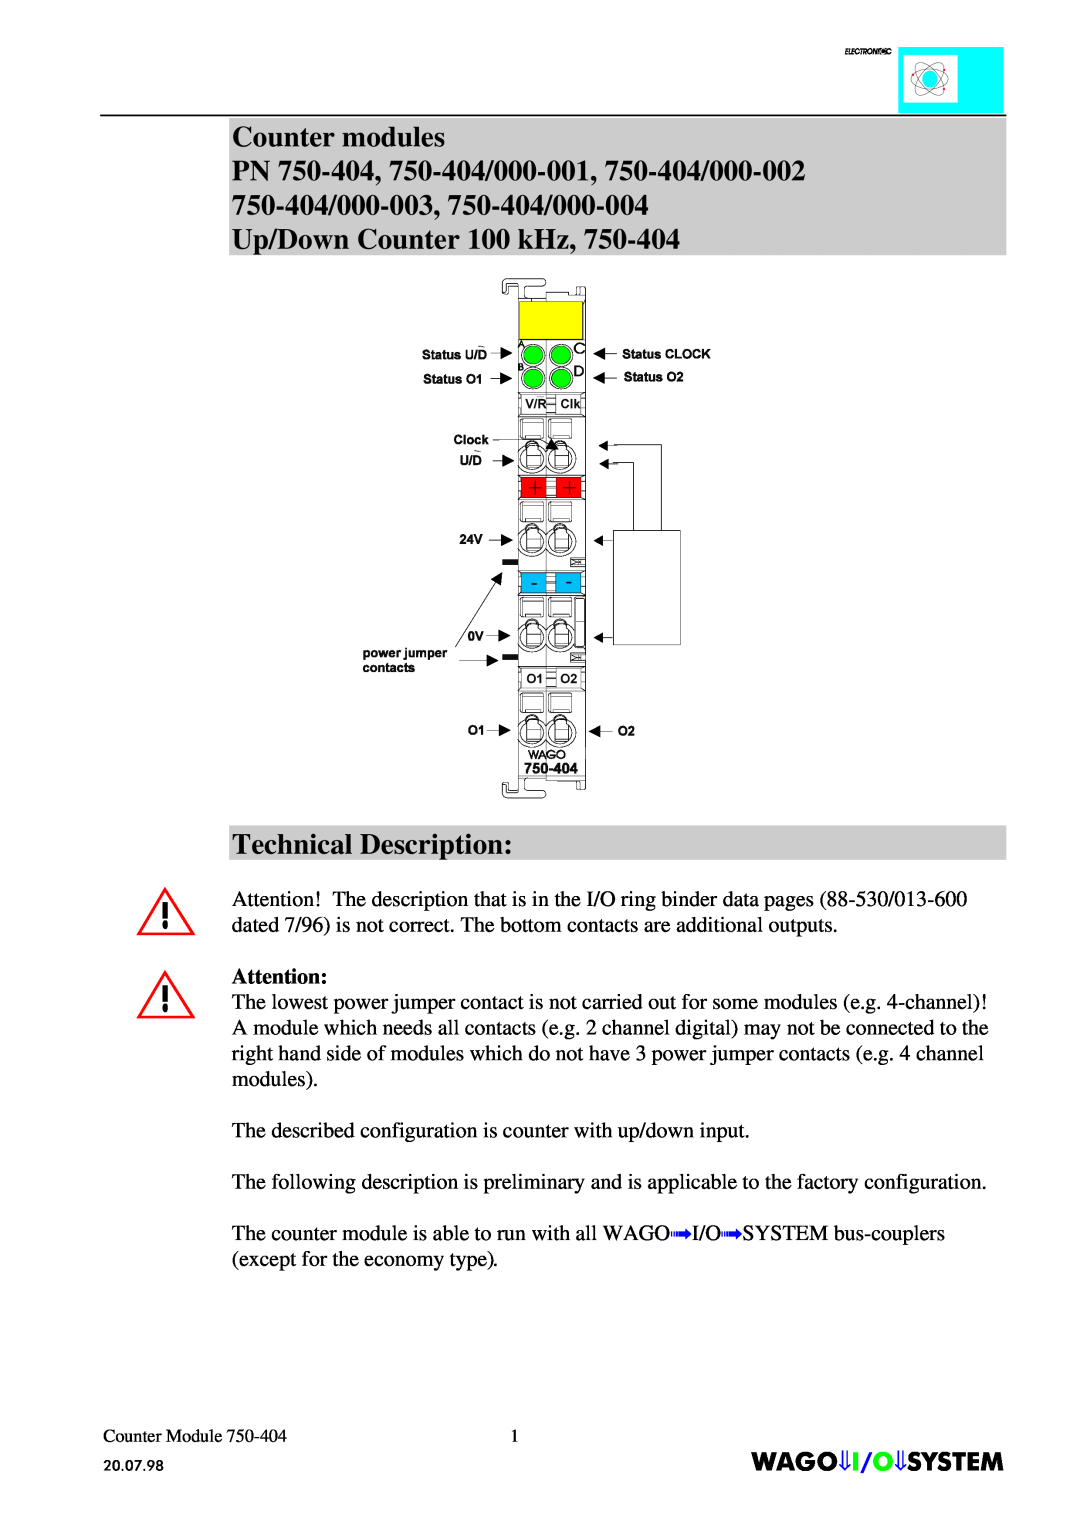 Quatech INTERBUS S manual Counter modules, Technical Description, $*2,26670 